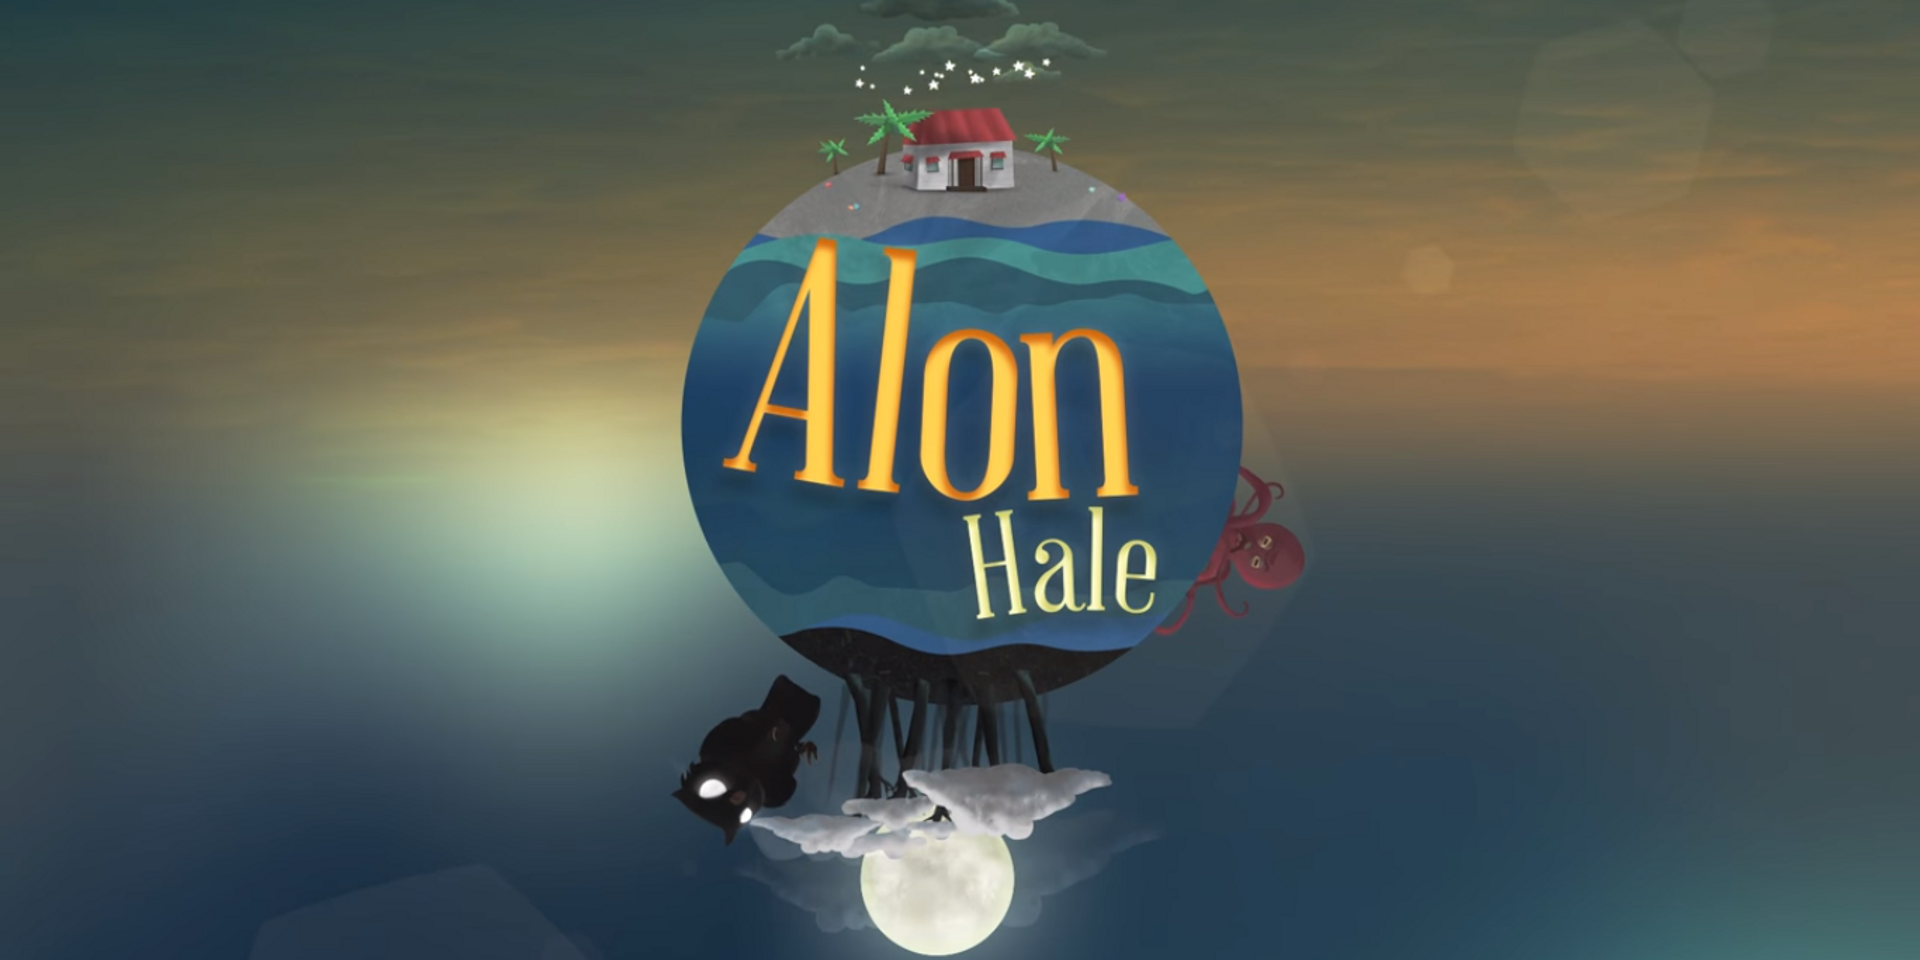 Hale releases new single, Alon, debuts lyric video – watch